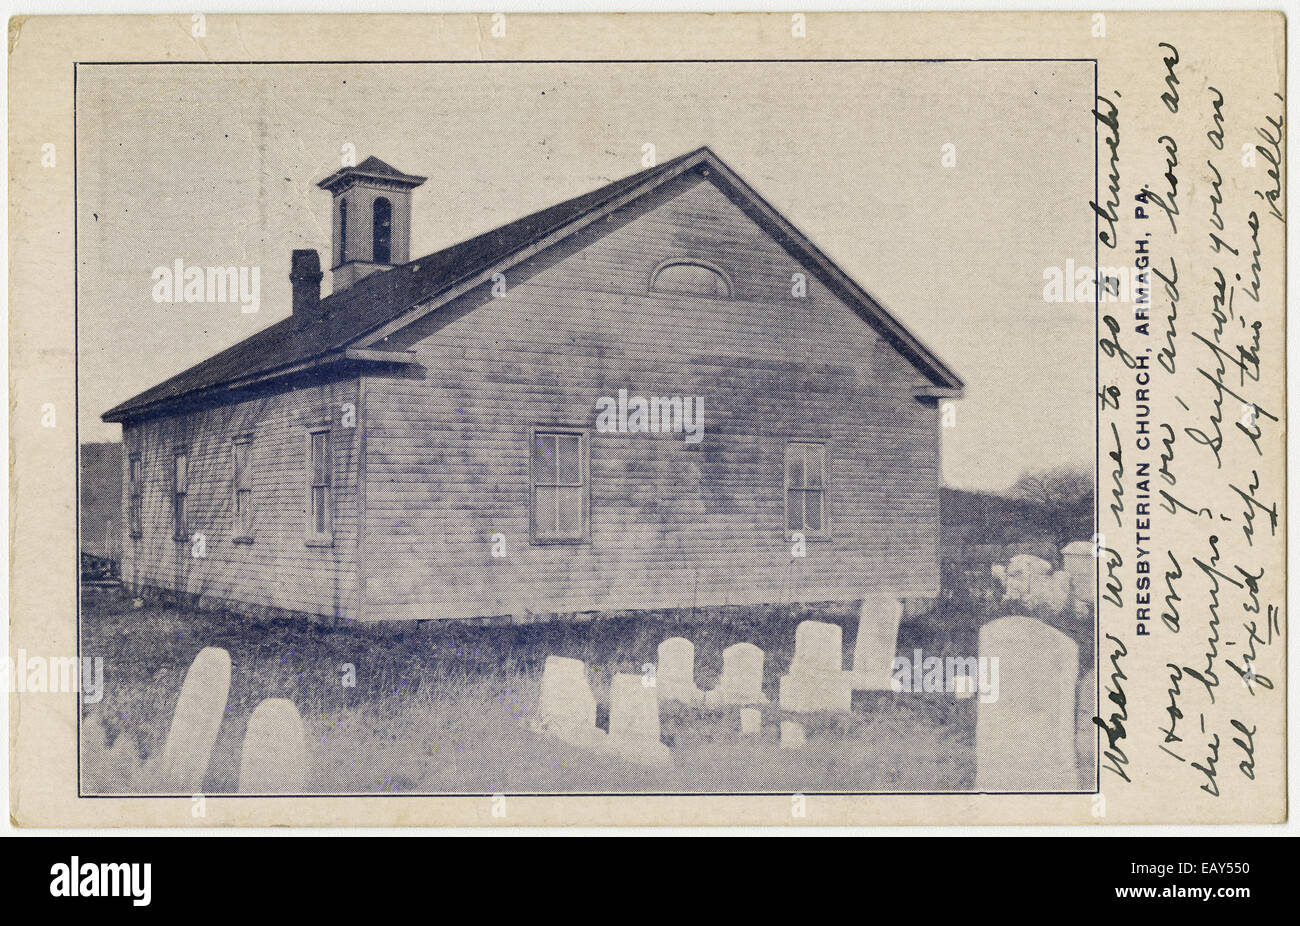 Presbyterianische Kirche in Armagh, Pennsylvania nach einer Pre-1923 Postkarte von RG-428 Postkarten-Kollektion Stockfoto